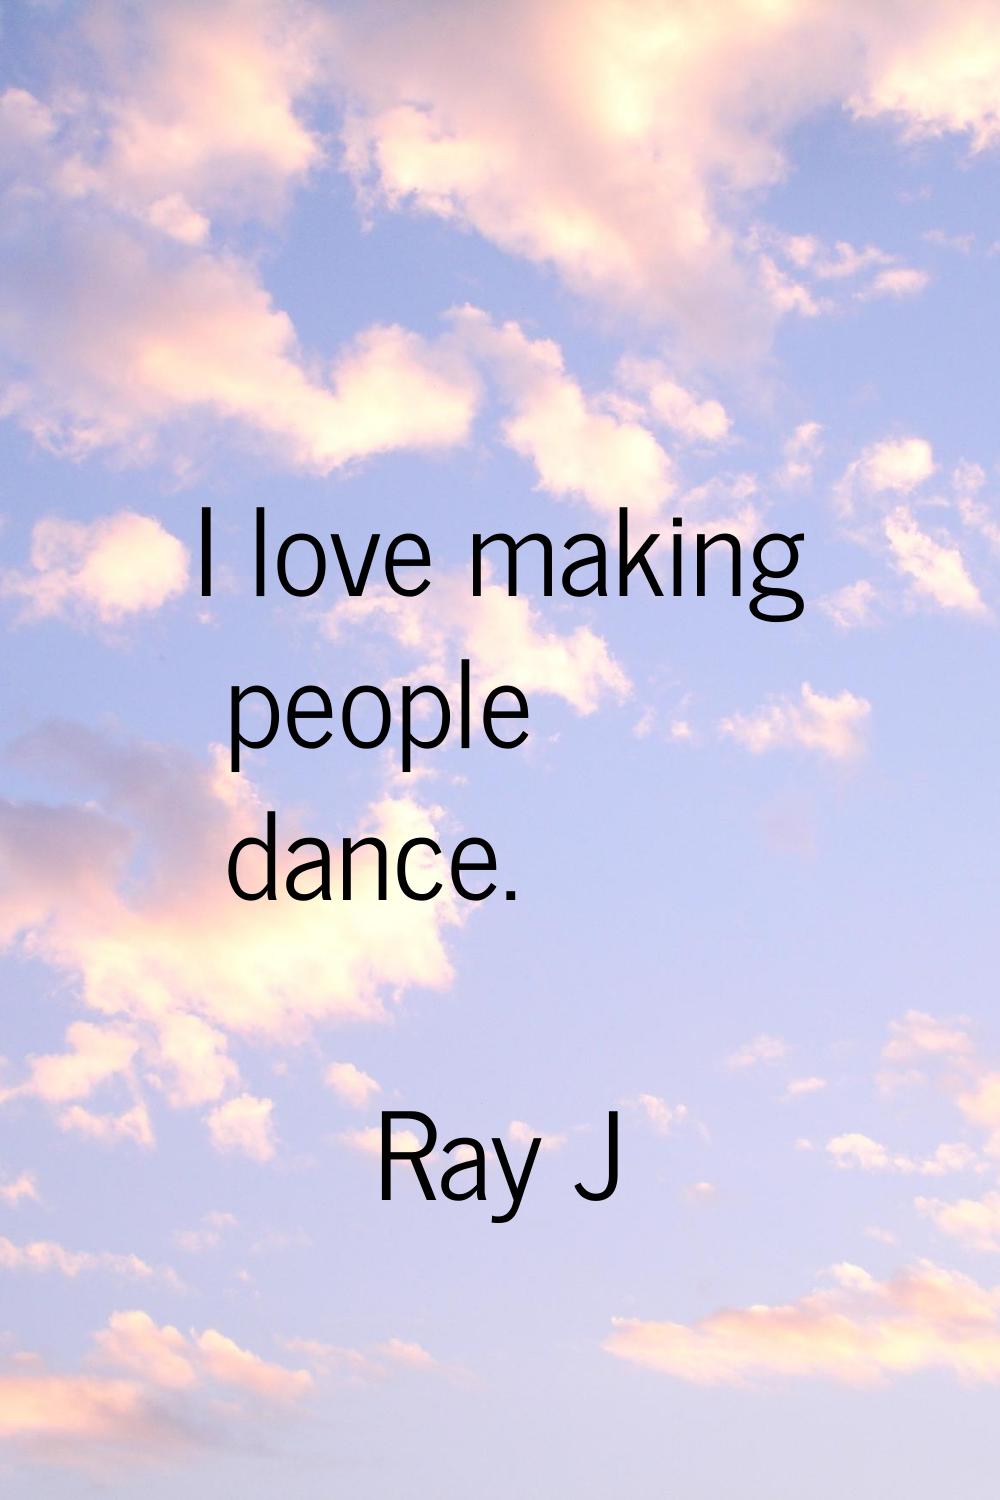 I love making people dance.